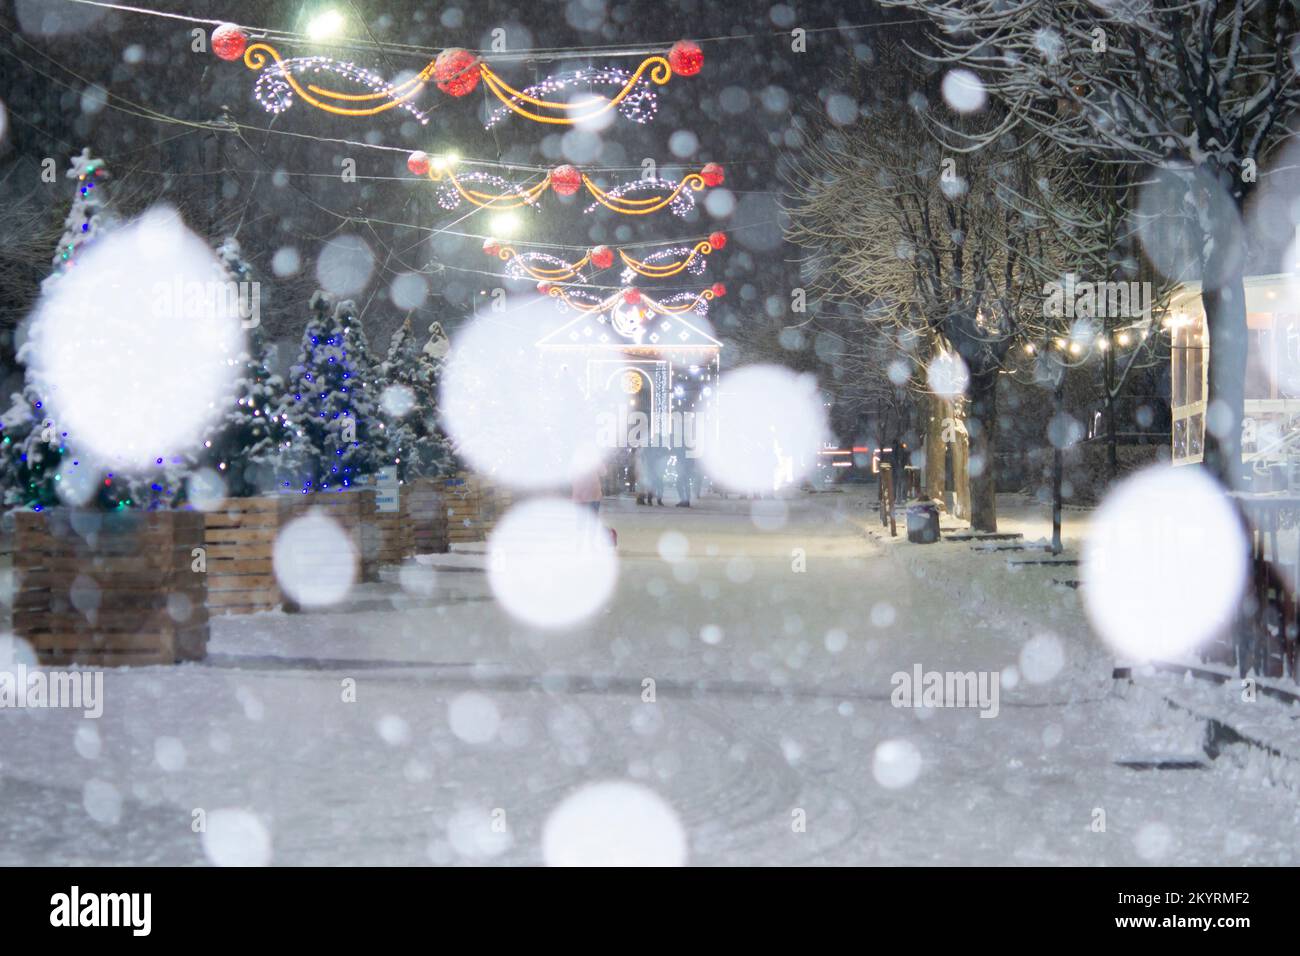 City street during snowfall at winter night. Many decorated Christmas trees, illumination, decoration on street. New Year Christmas holidays celebration. Lanterns garlands on trees Stock Photo